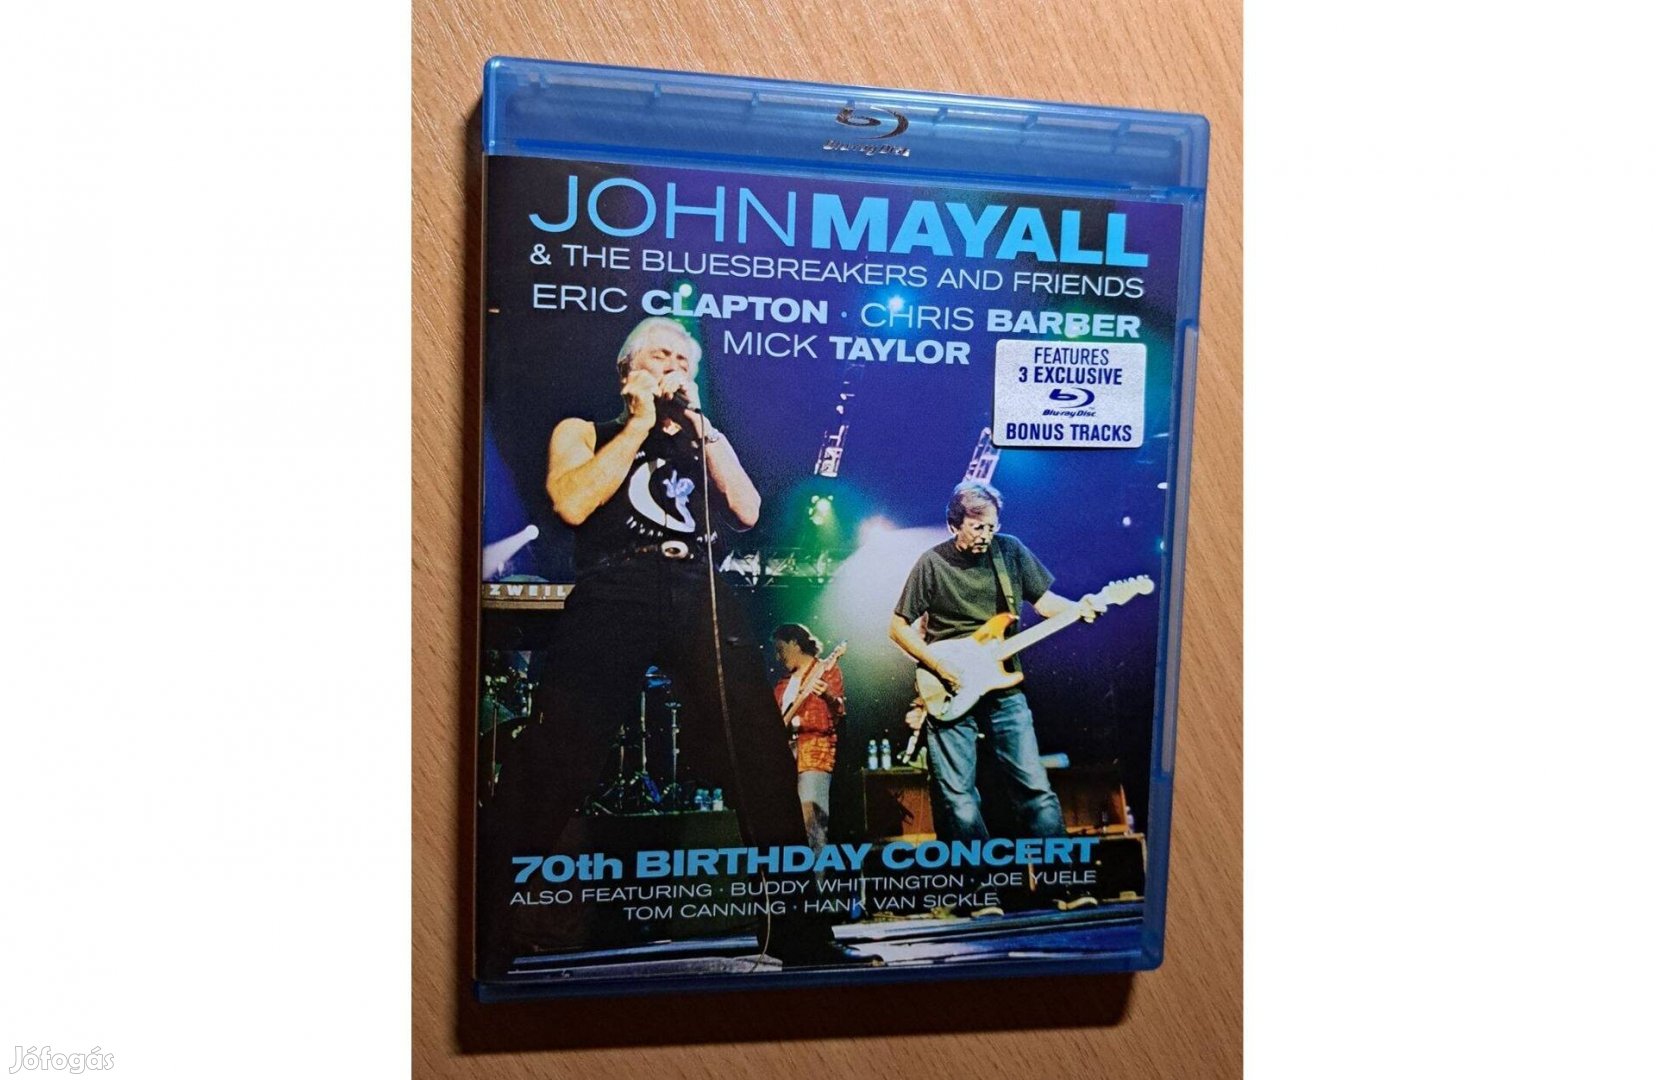 John Mayall - 70th Birthday Concert - Blu-ray